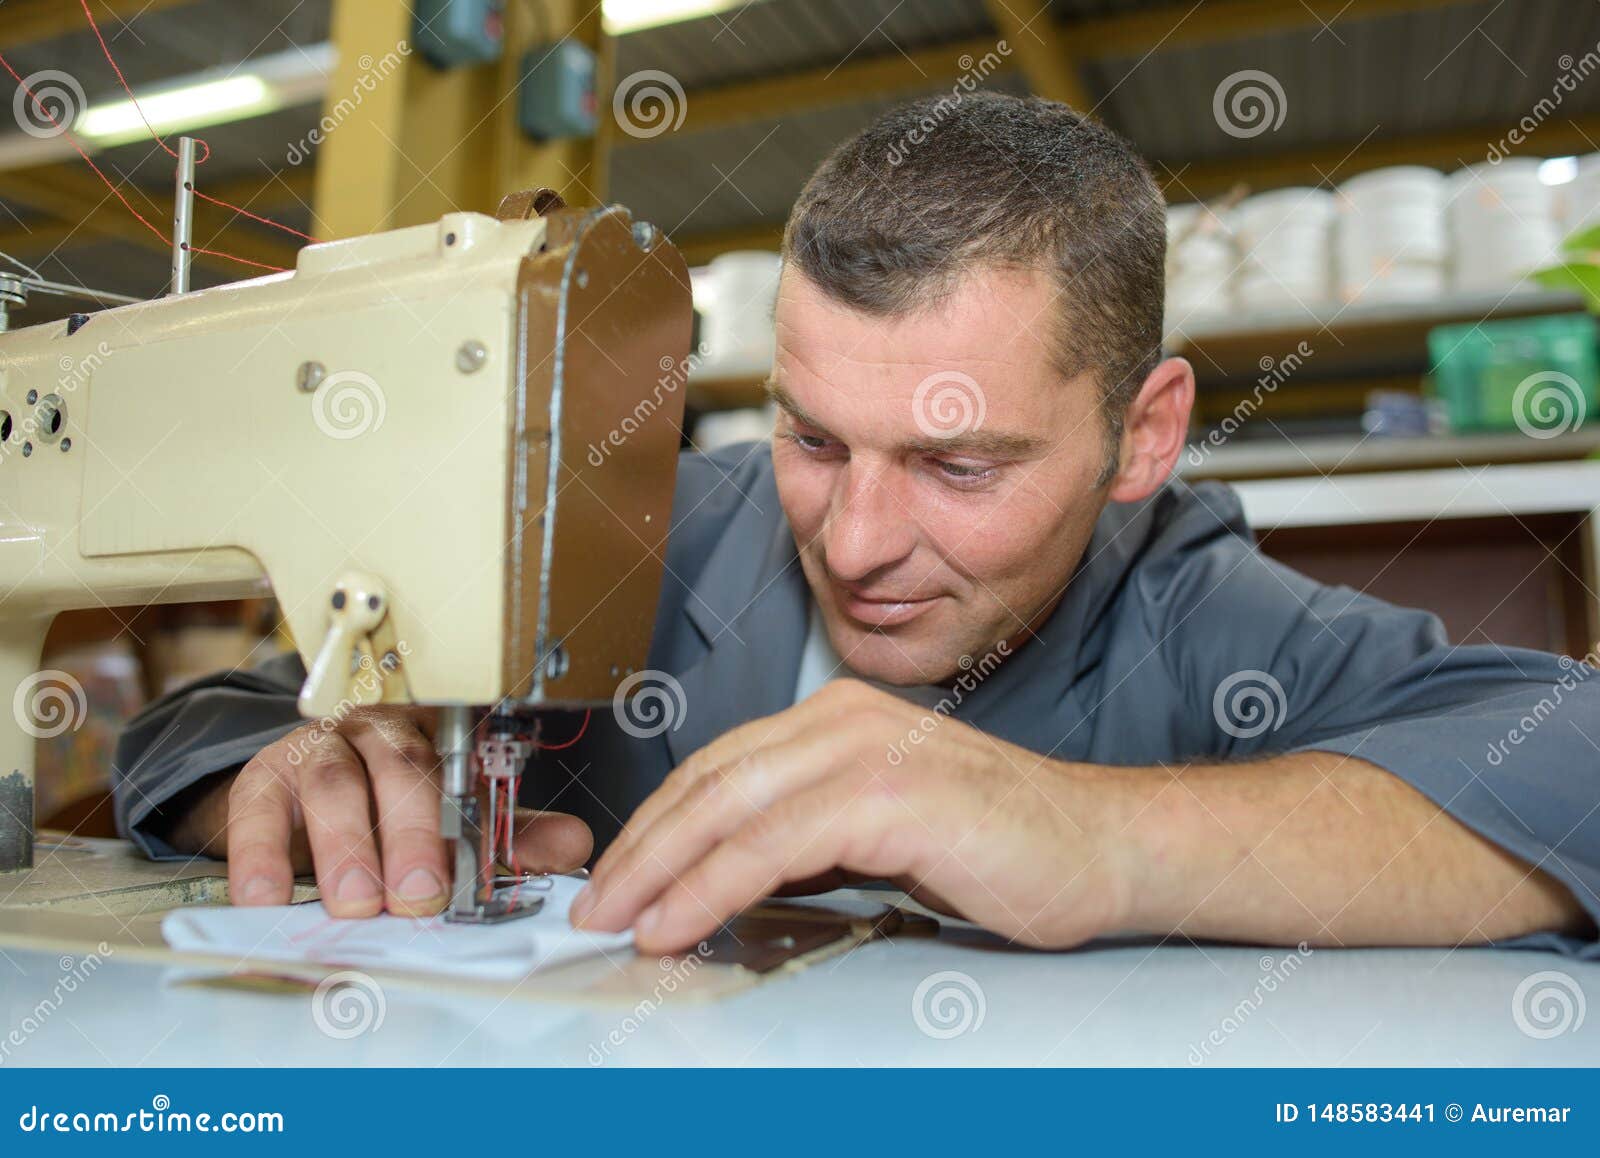 Man on sewing machine stock image. Image of warehouse - 148583441